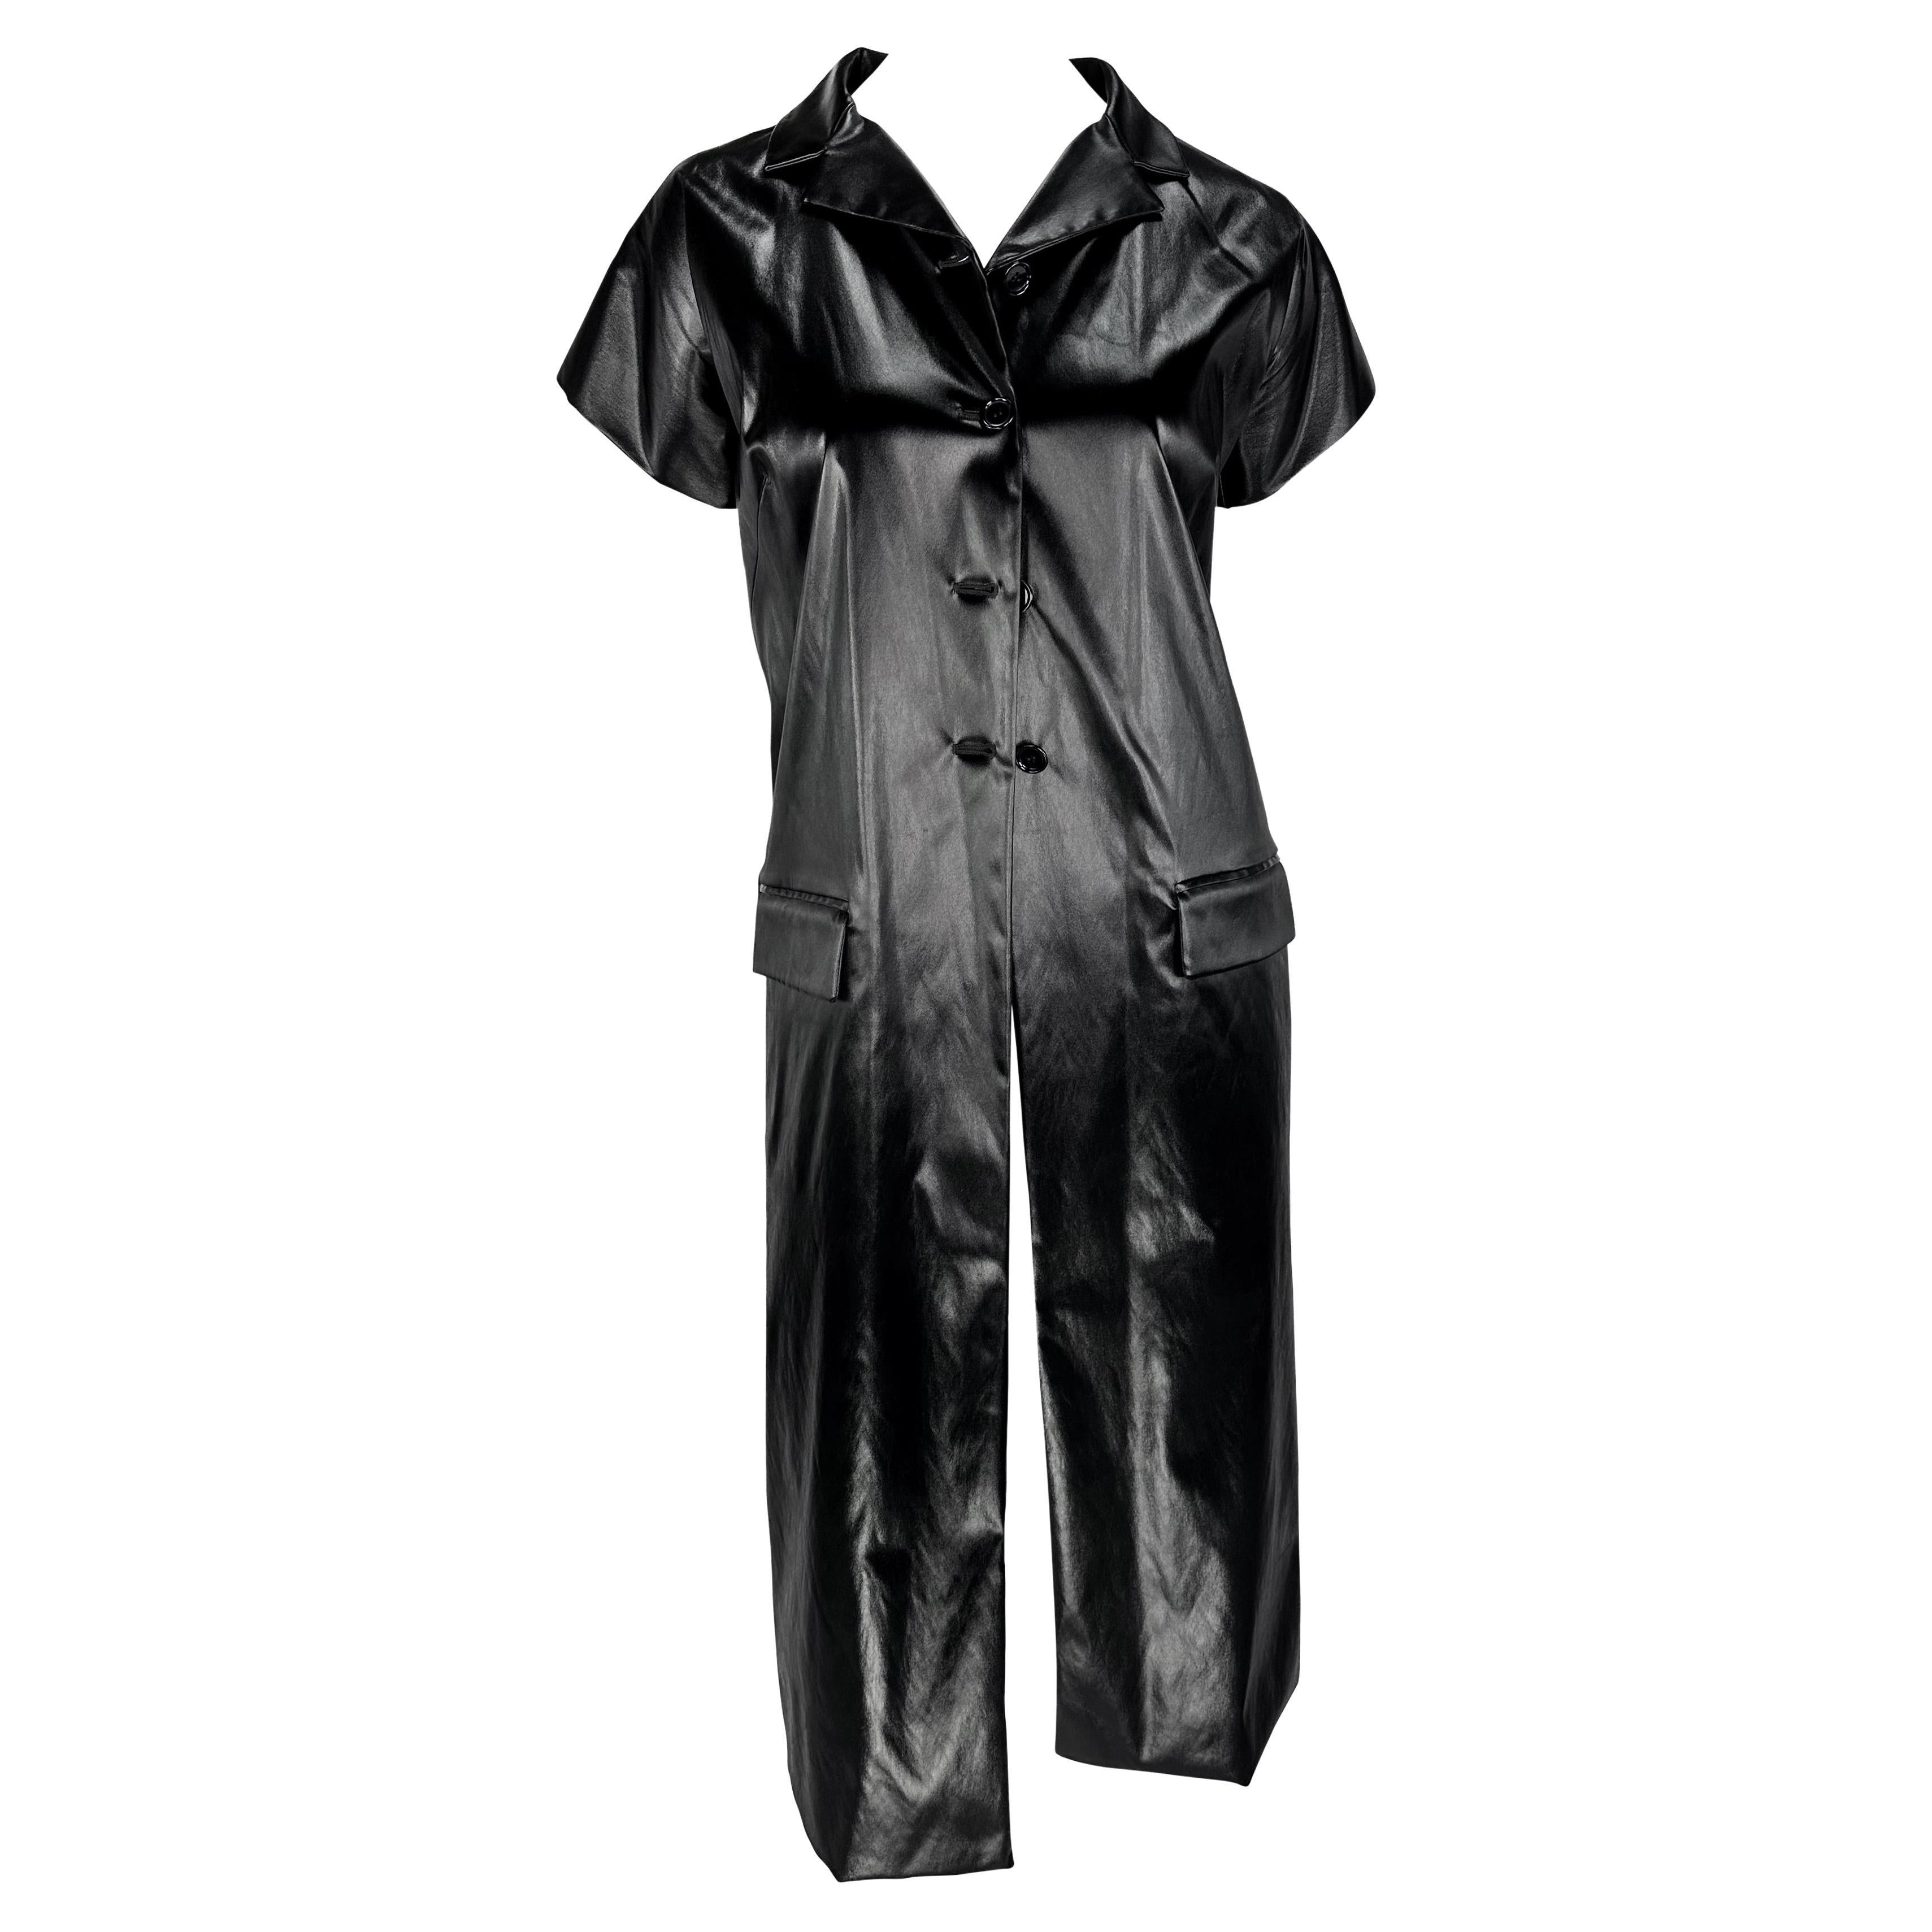 S/S 1999 Dolce & Gabbana Runway Wet Look Stretch Black Coat Dress Short Sleeve For Sale